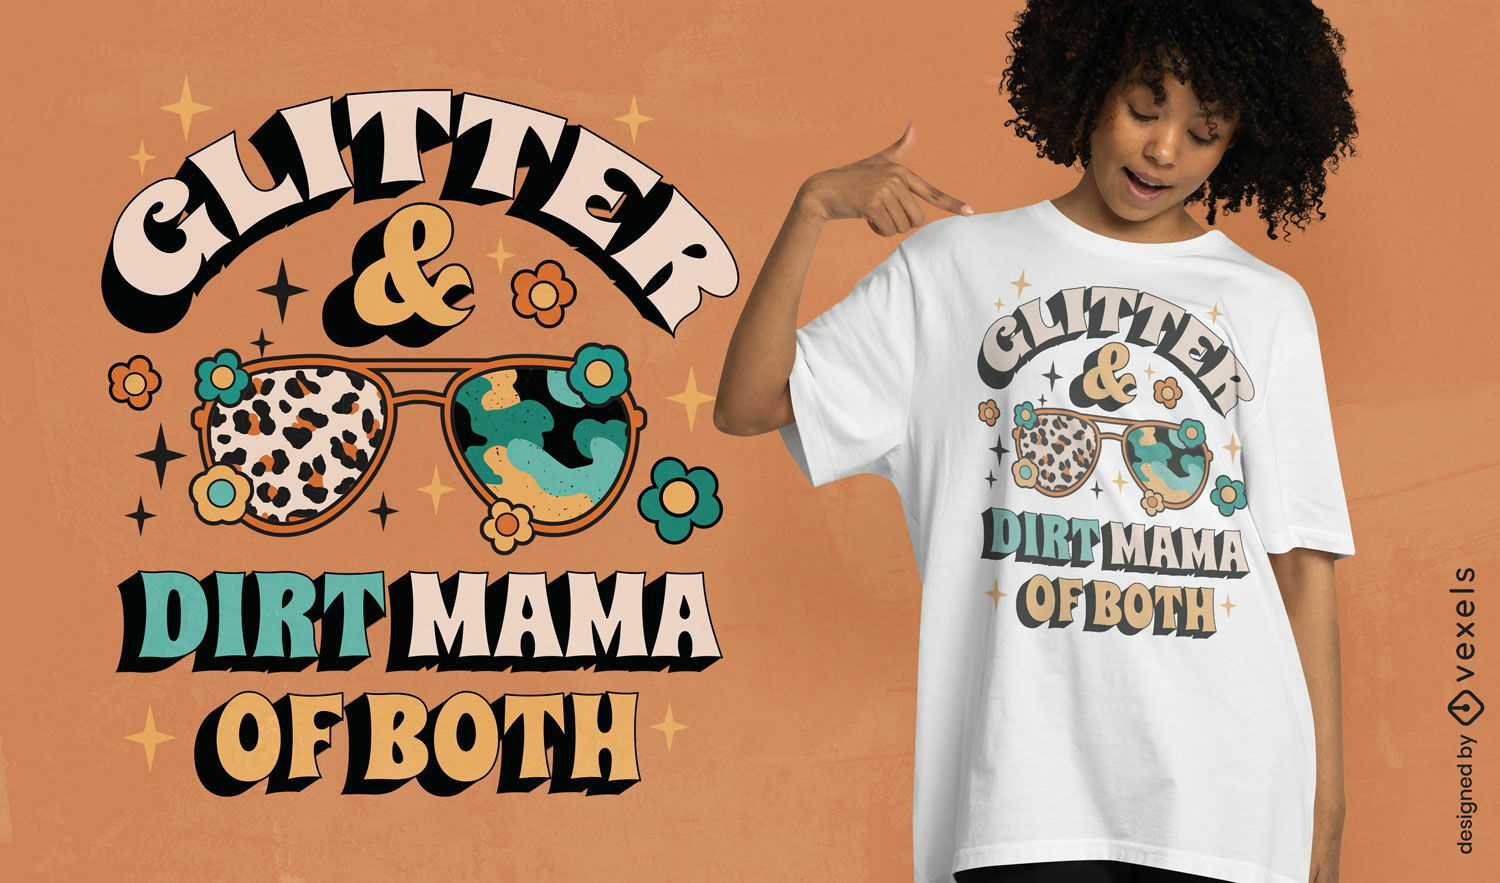 Dise?o de camiseta Glitter & Dirt Mama de ambos.